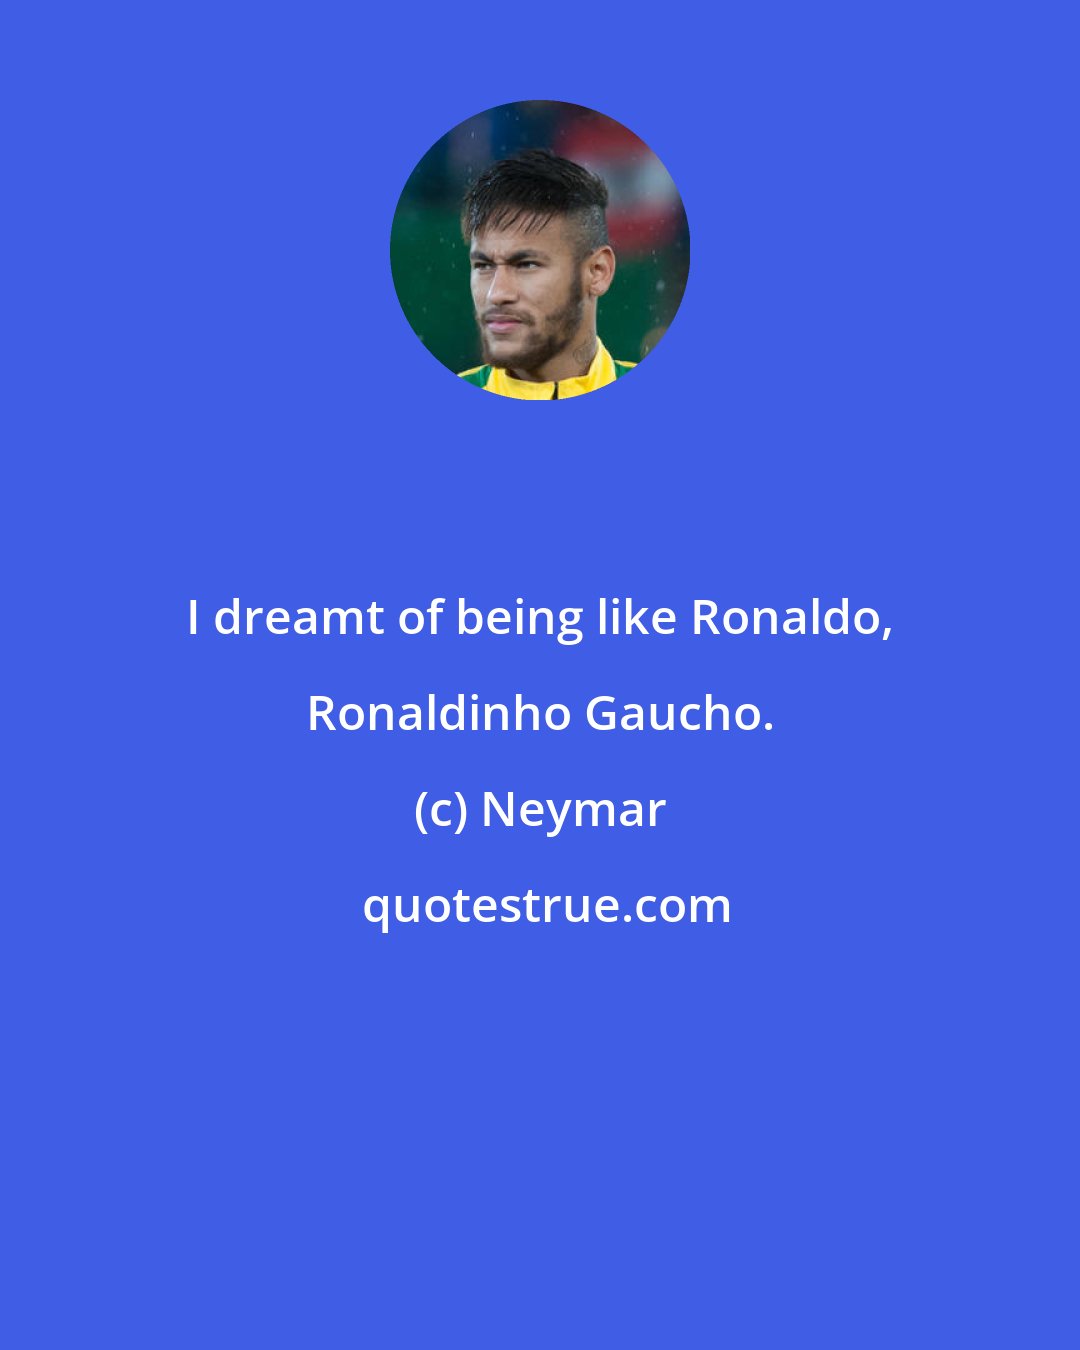 Neymar: I dreamt of being like Ronaldo, Ronaldinho Gaucho.